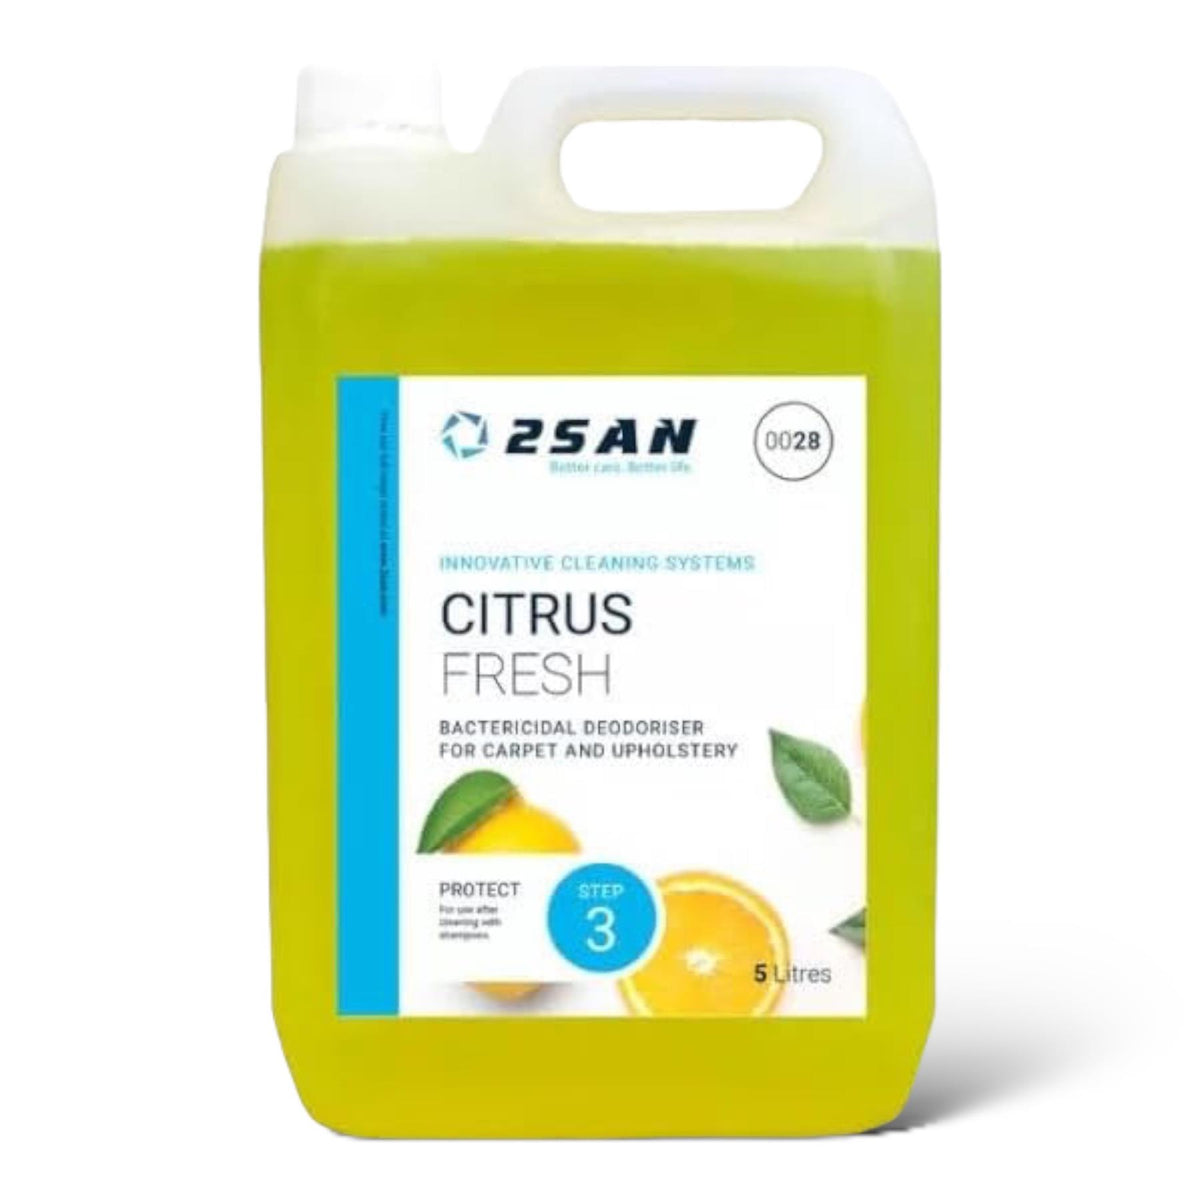 2SAN Citrus Fresh Bactericidal Deodoriser for Carpets and Upholstery 5 Litre